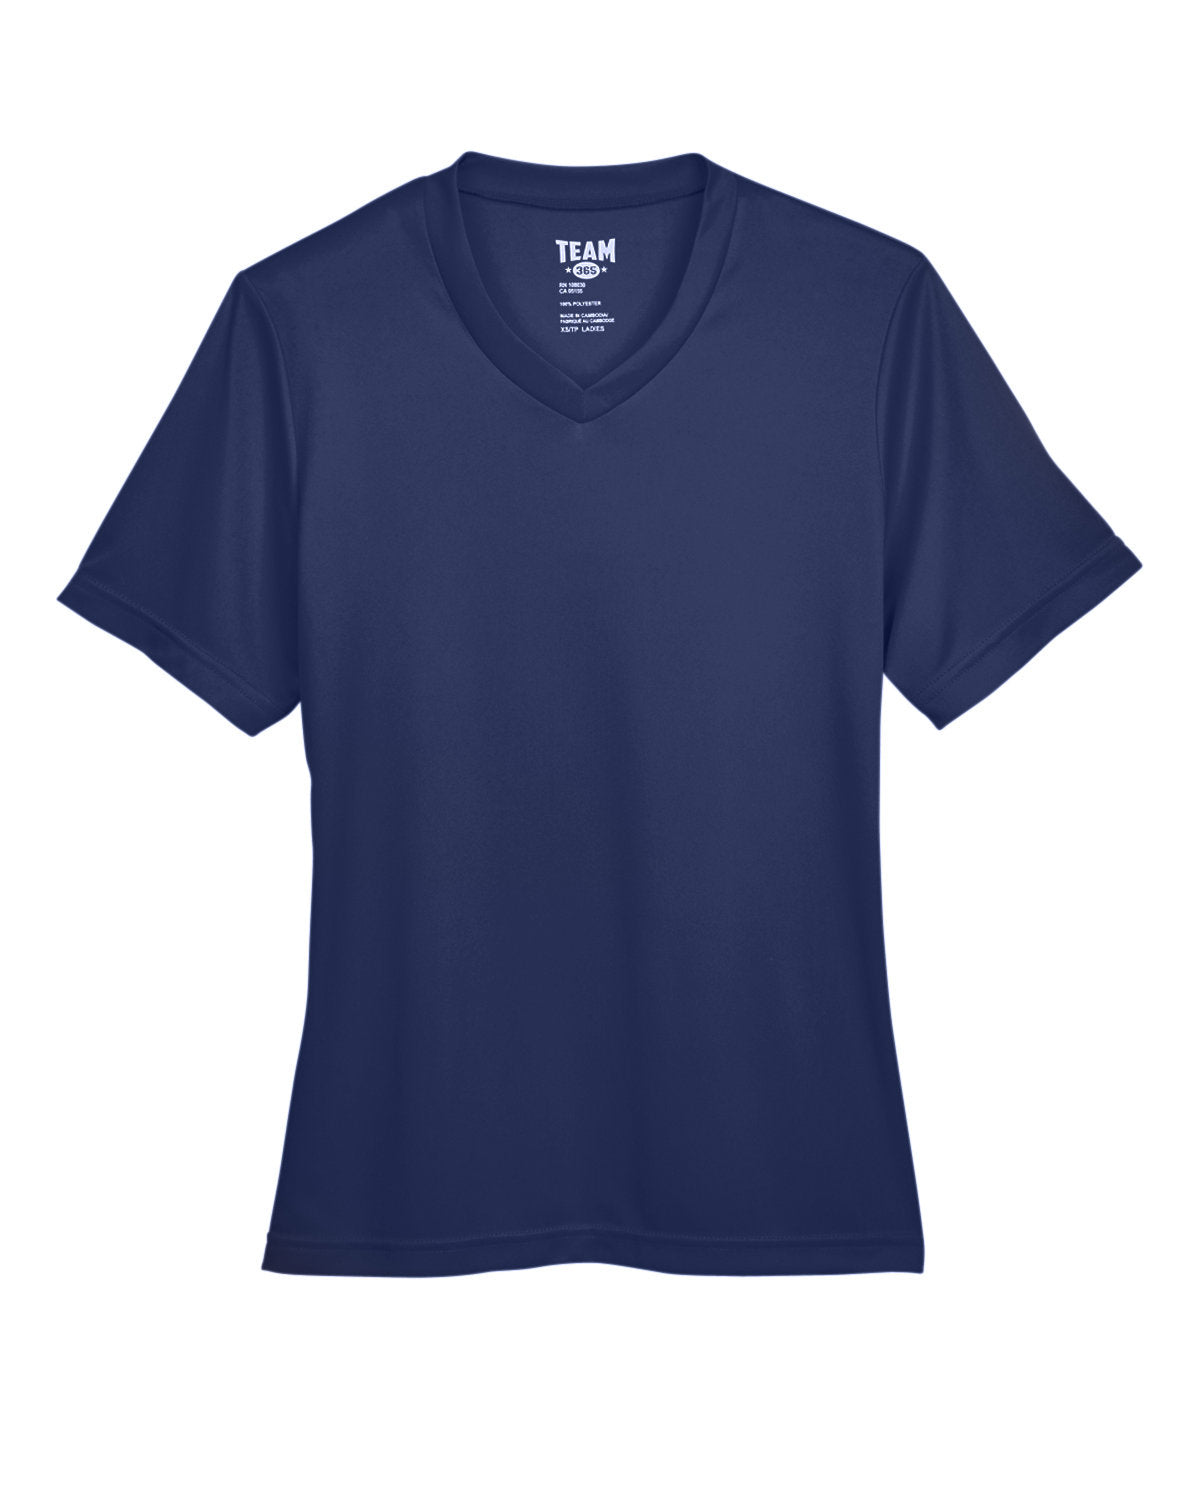 Team 365 Ladies' Zone Performance T-Shirt